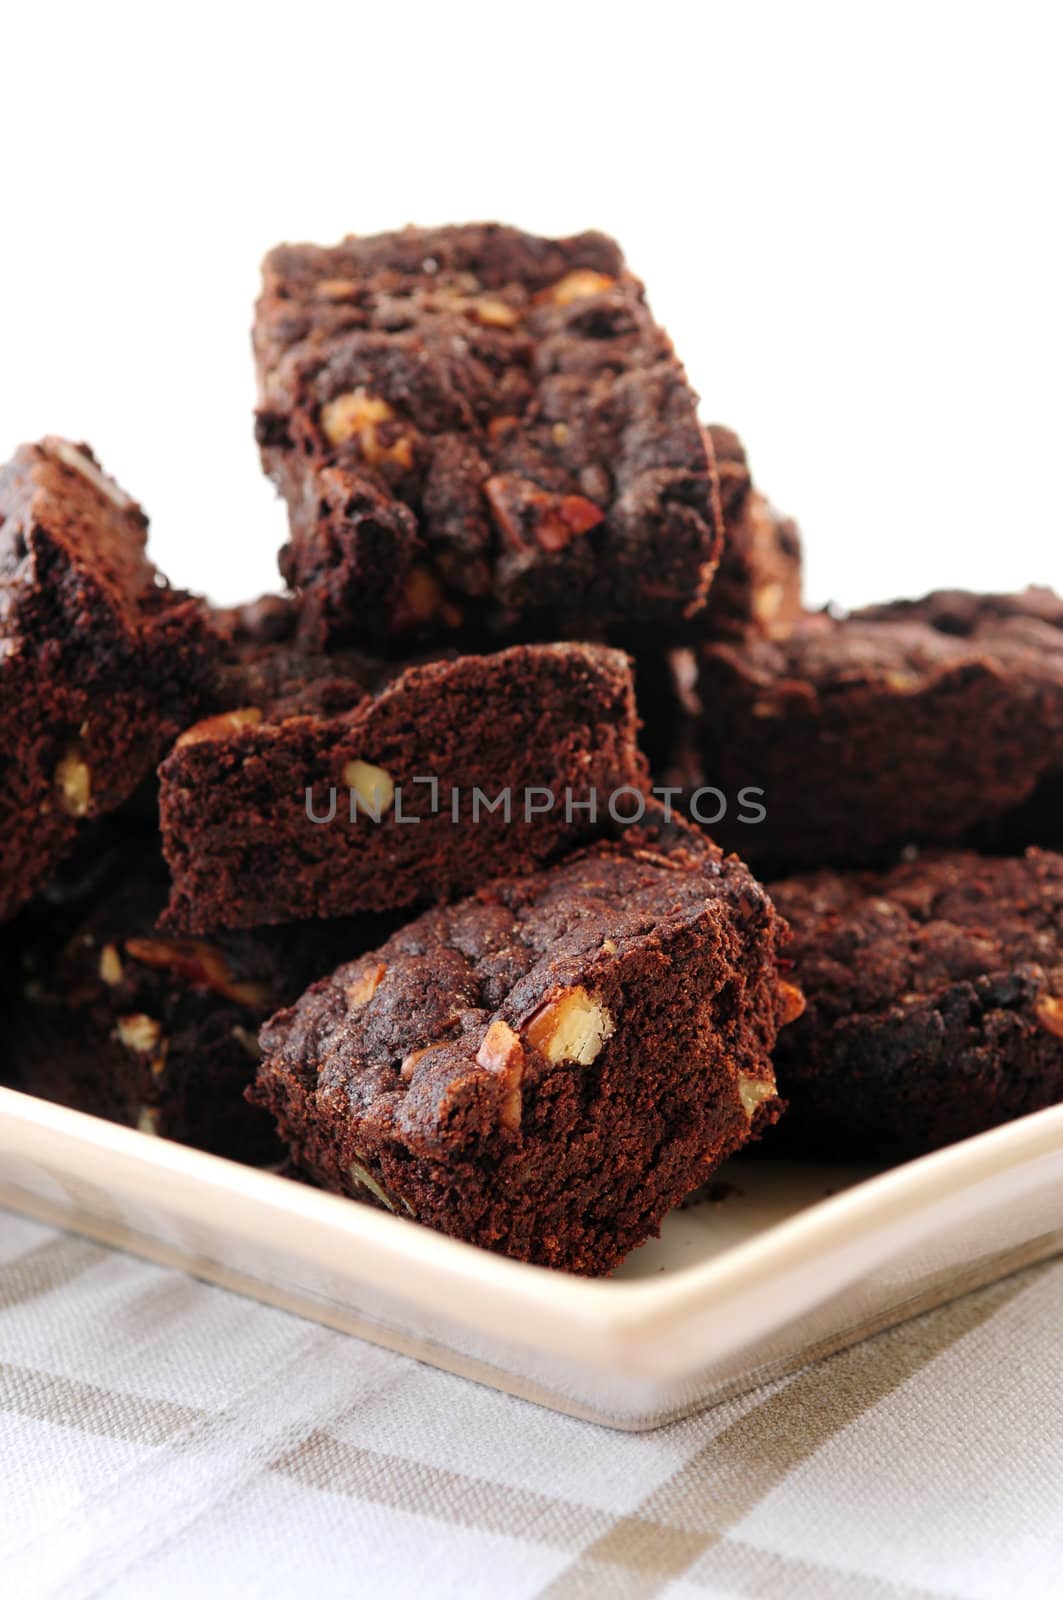 Homemade chocolate brownies by elenathewise